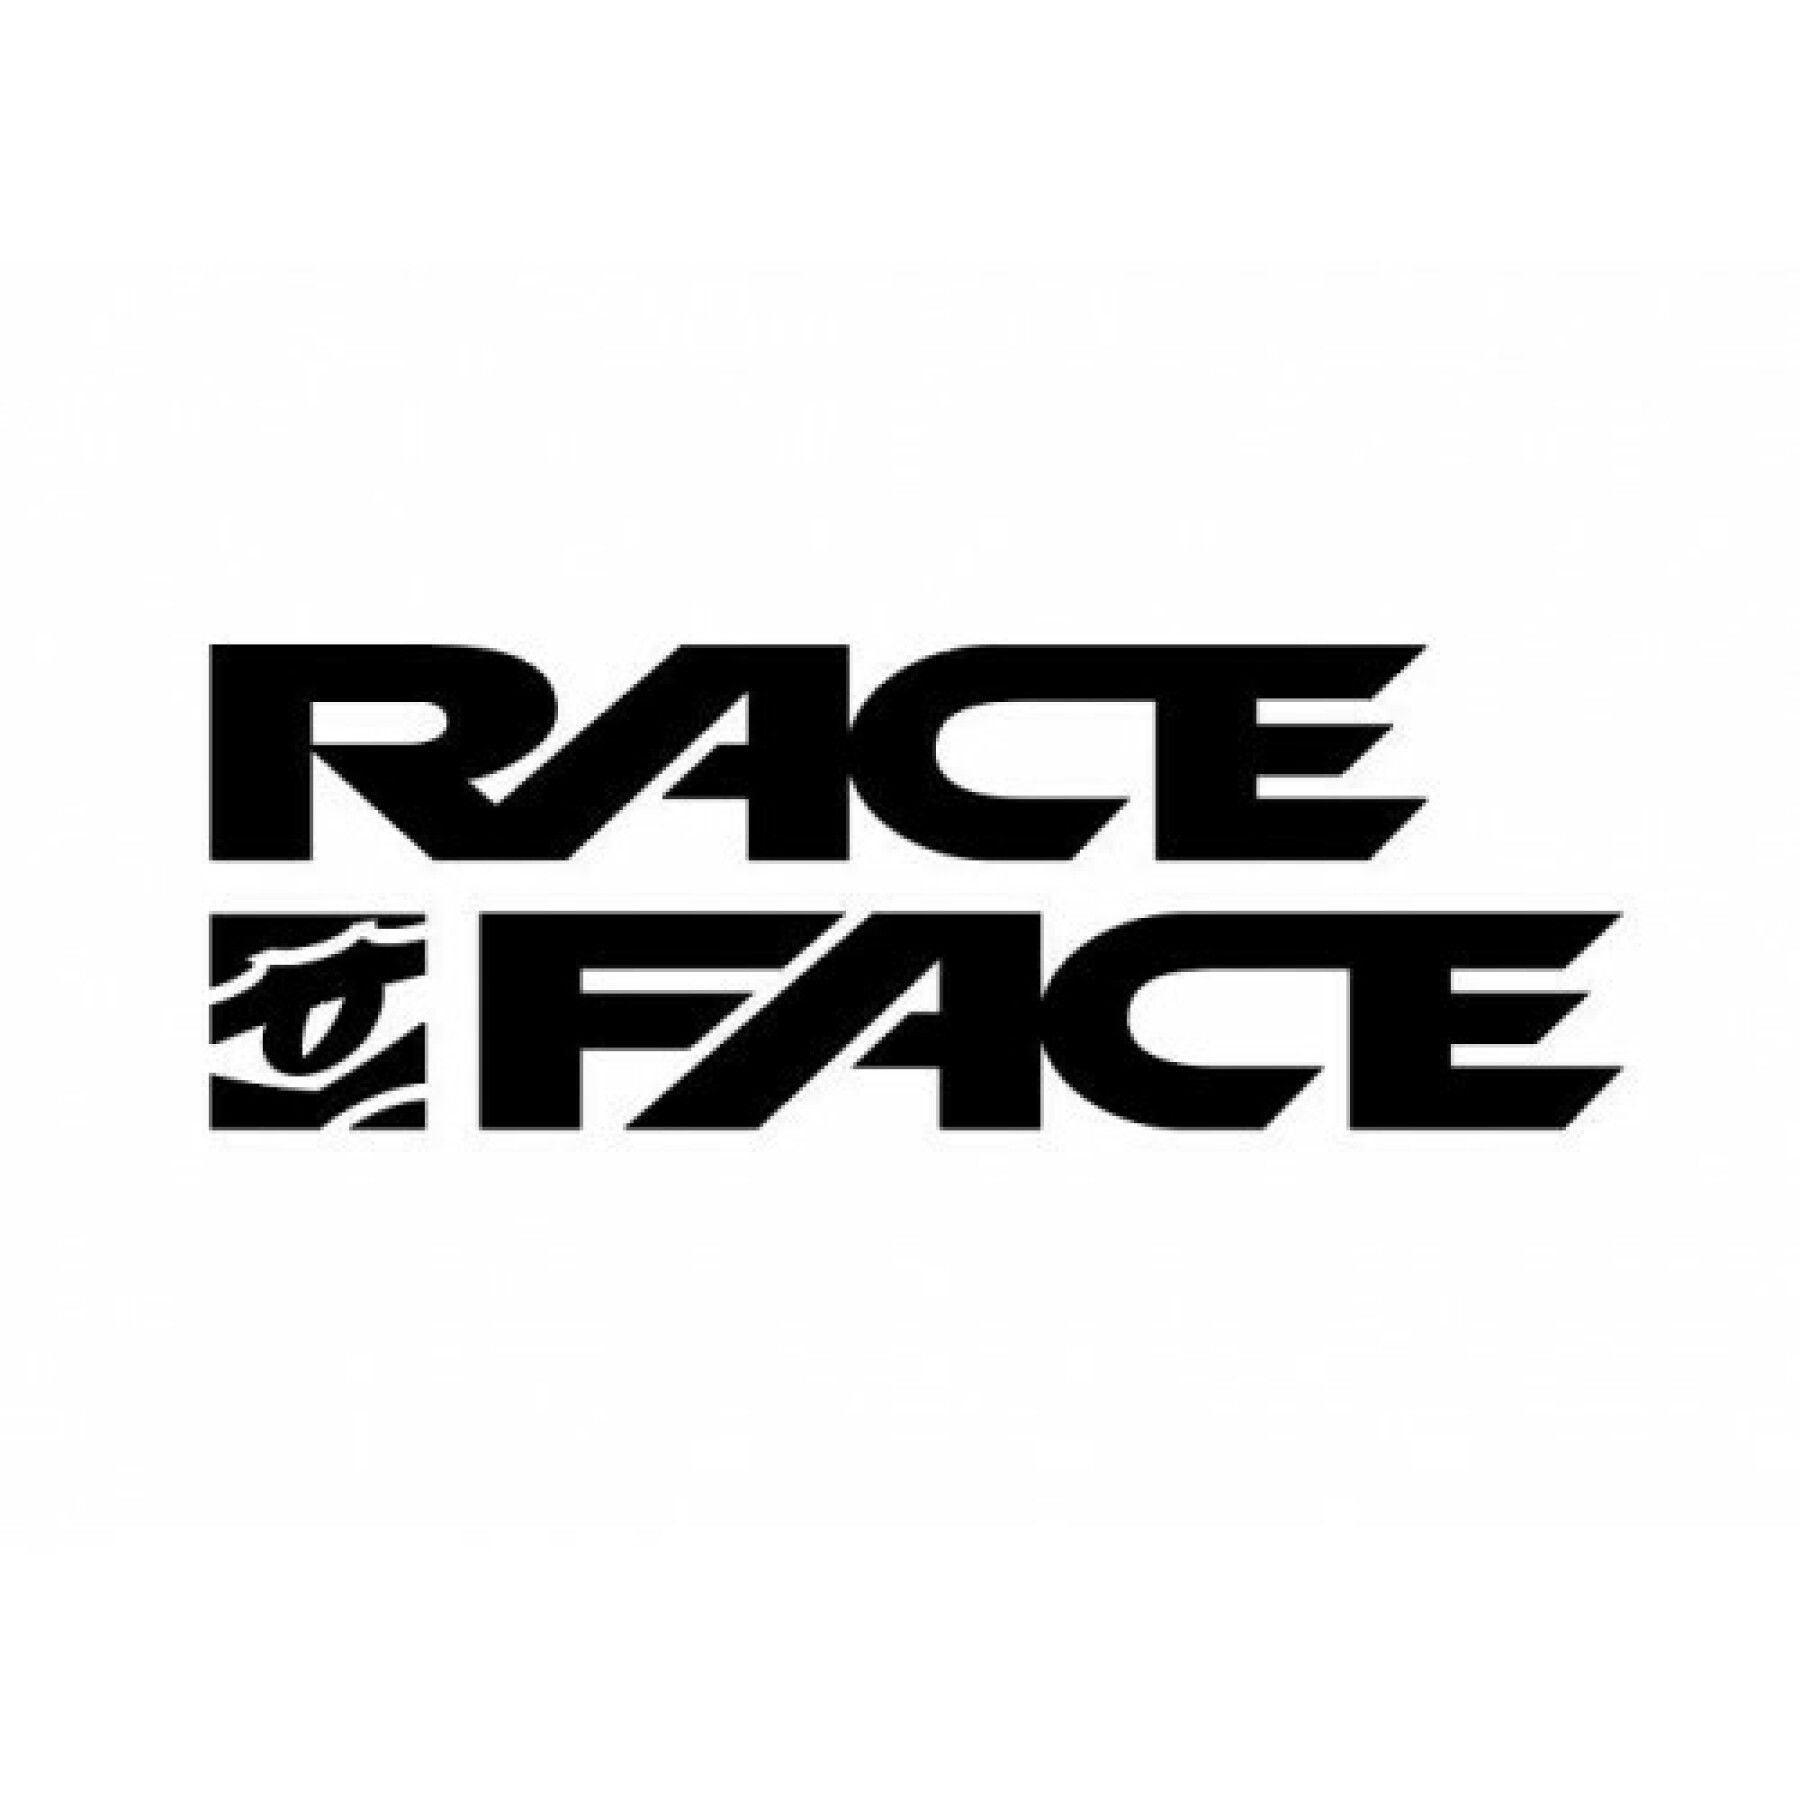 Llanta Race Face arc offset - 25 - 29 - 32t